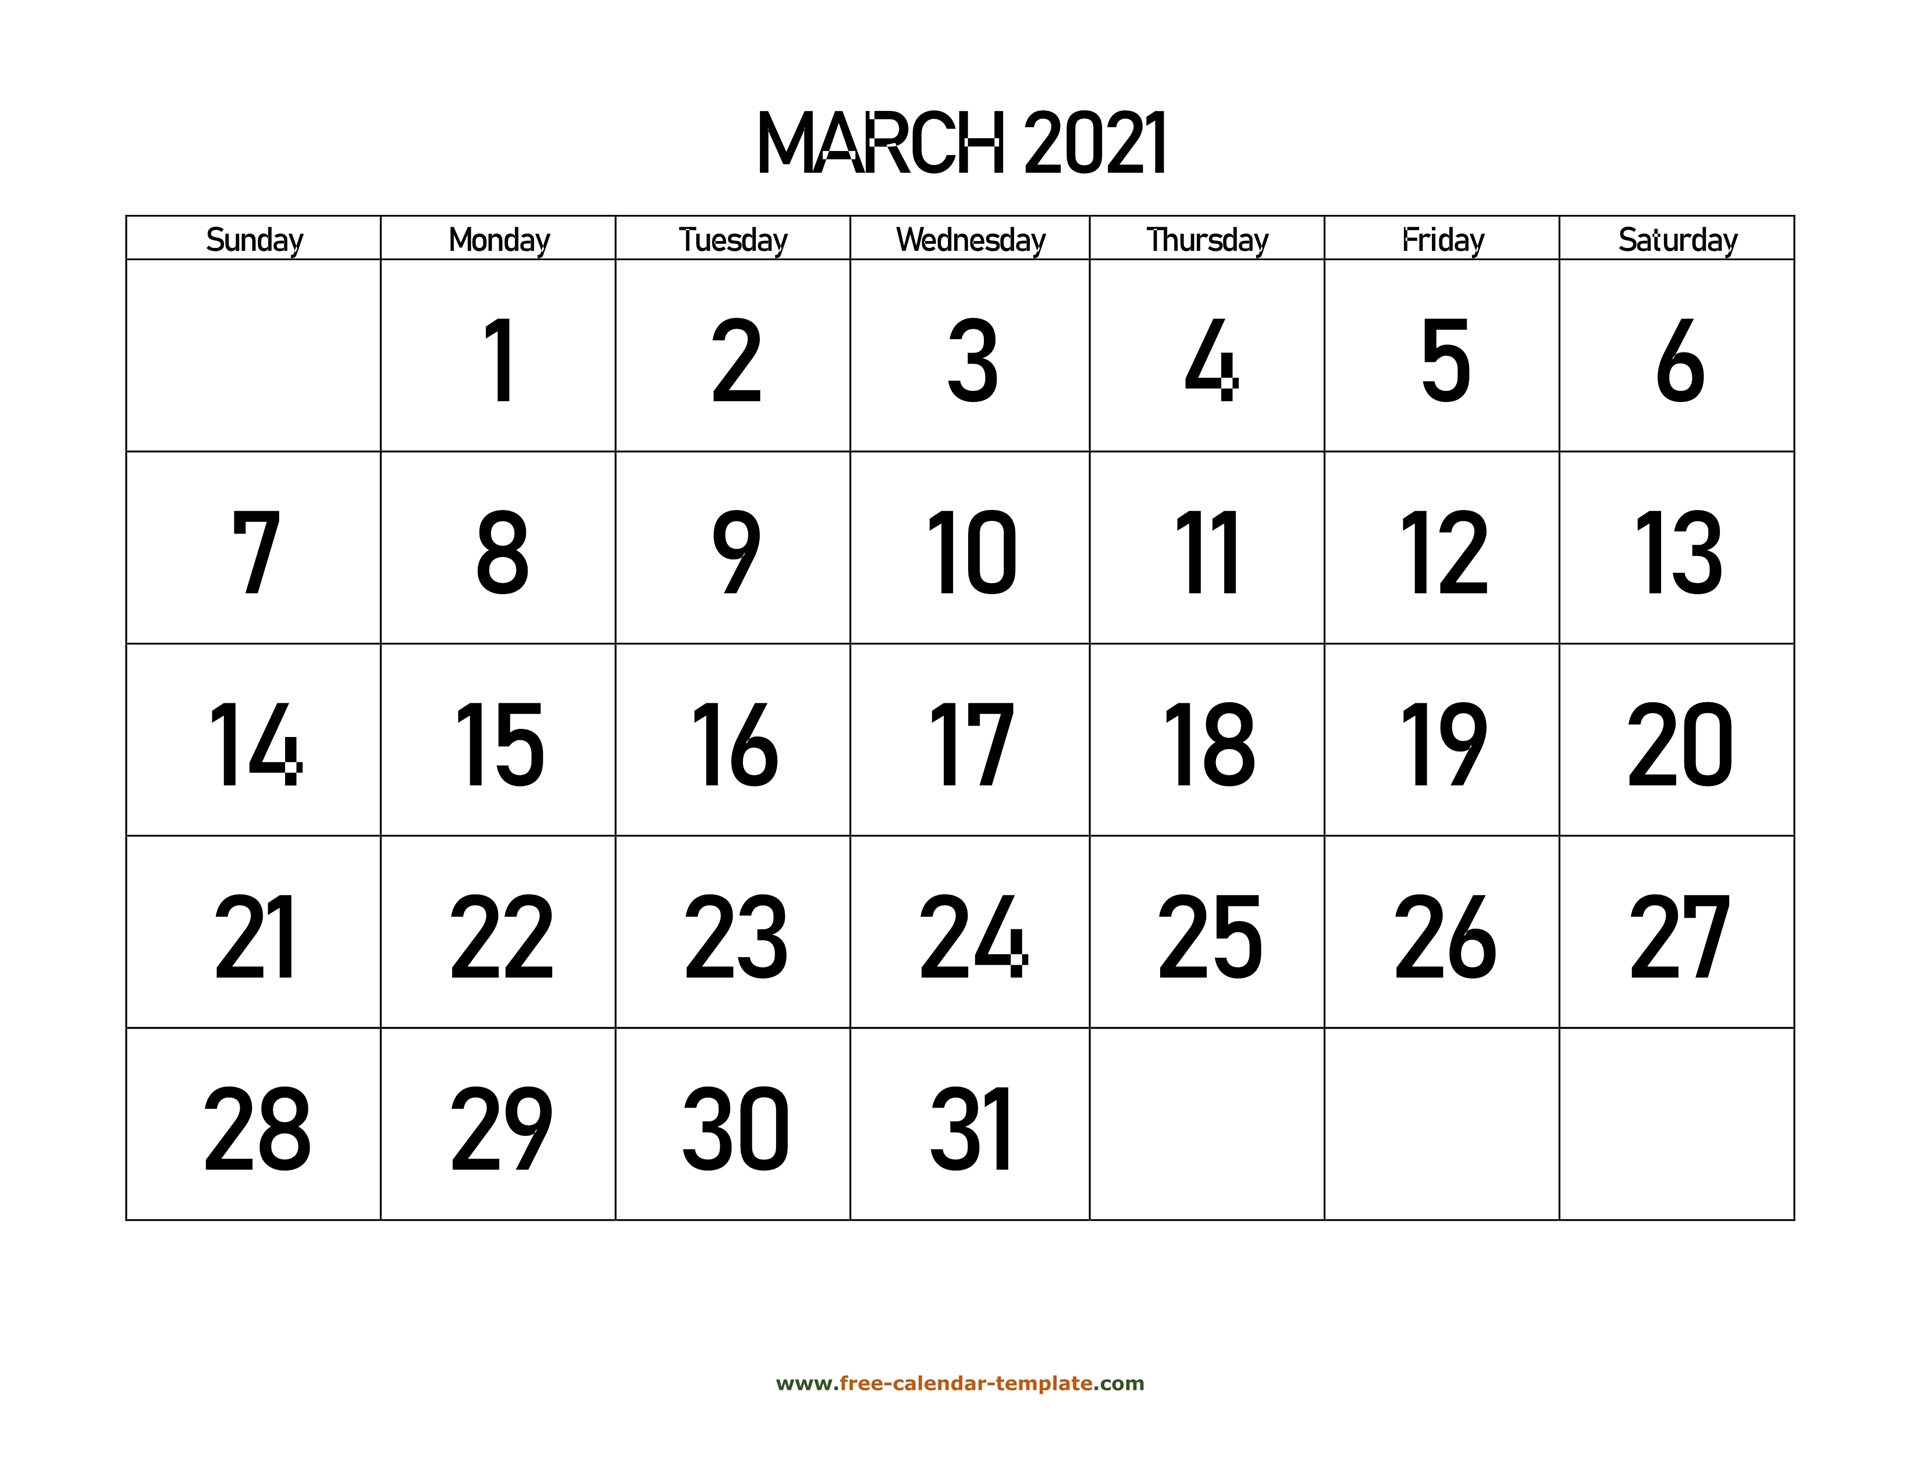 March 21 Free Calendar Tempplate Free Calendar Template Com